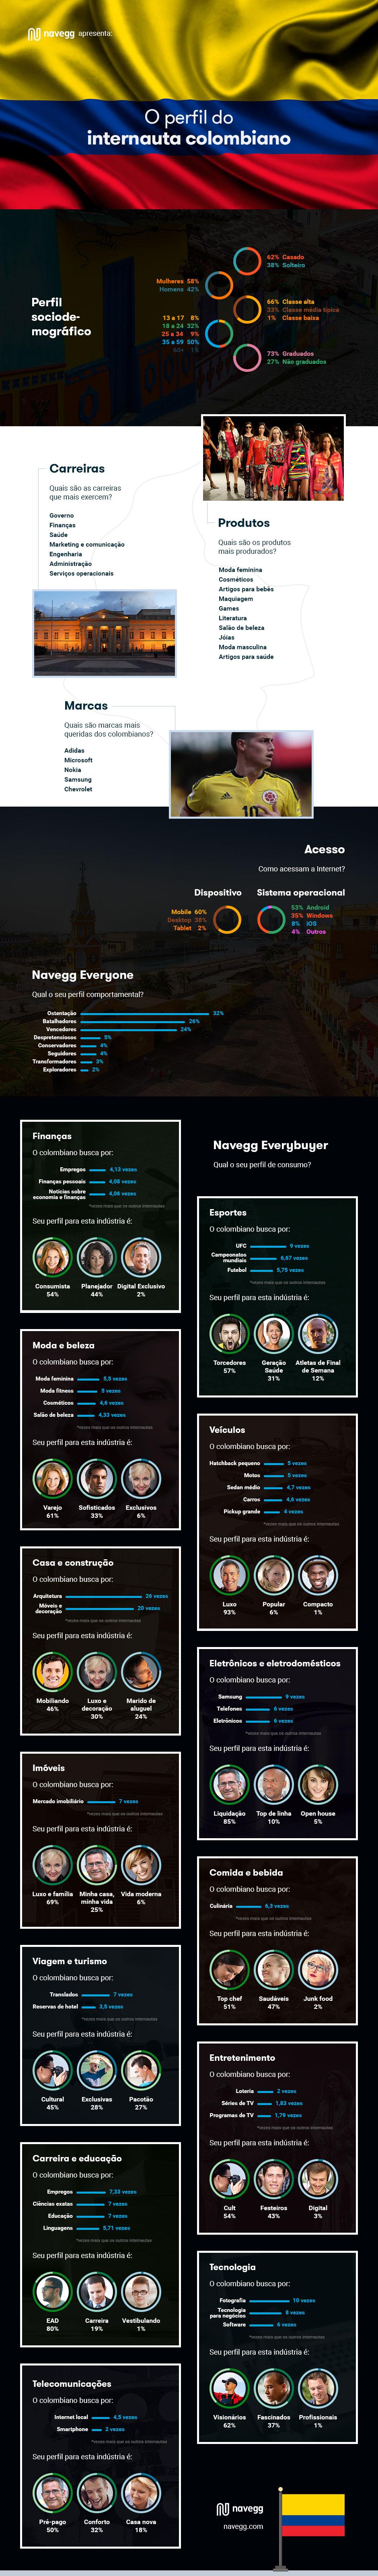 navegg-infografico-perfil-do-internauta-colombiano